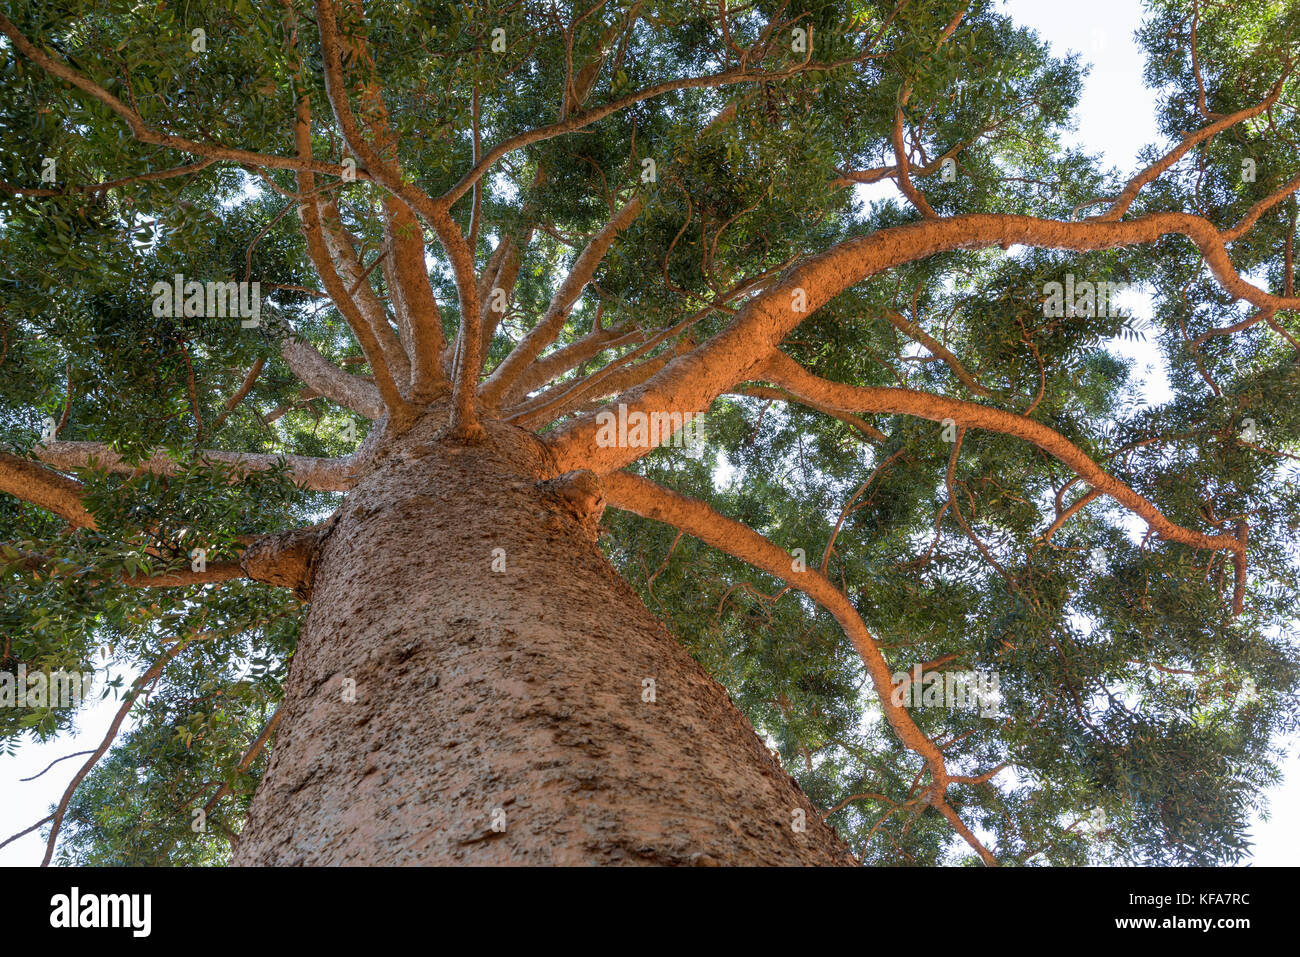 Queensland Kauri tree, Agathis robusta, Watt Park, Lavender bay, Sydney Stock Photo